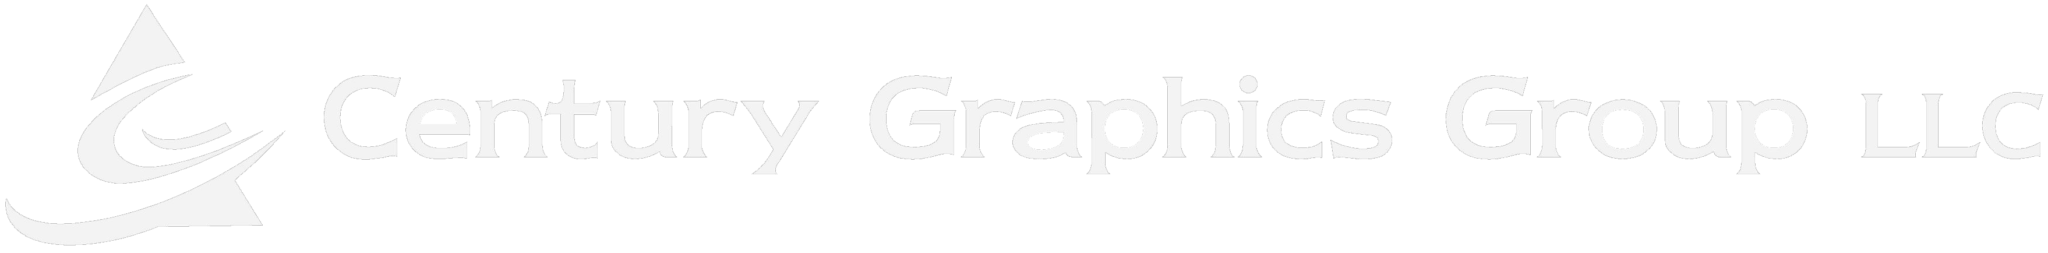 Century Graphics Group LLC